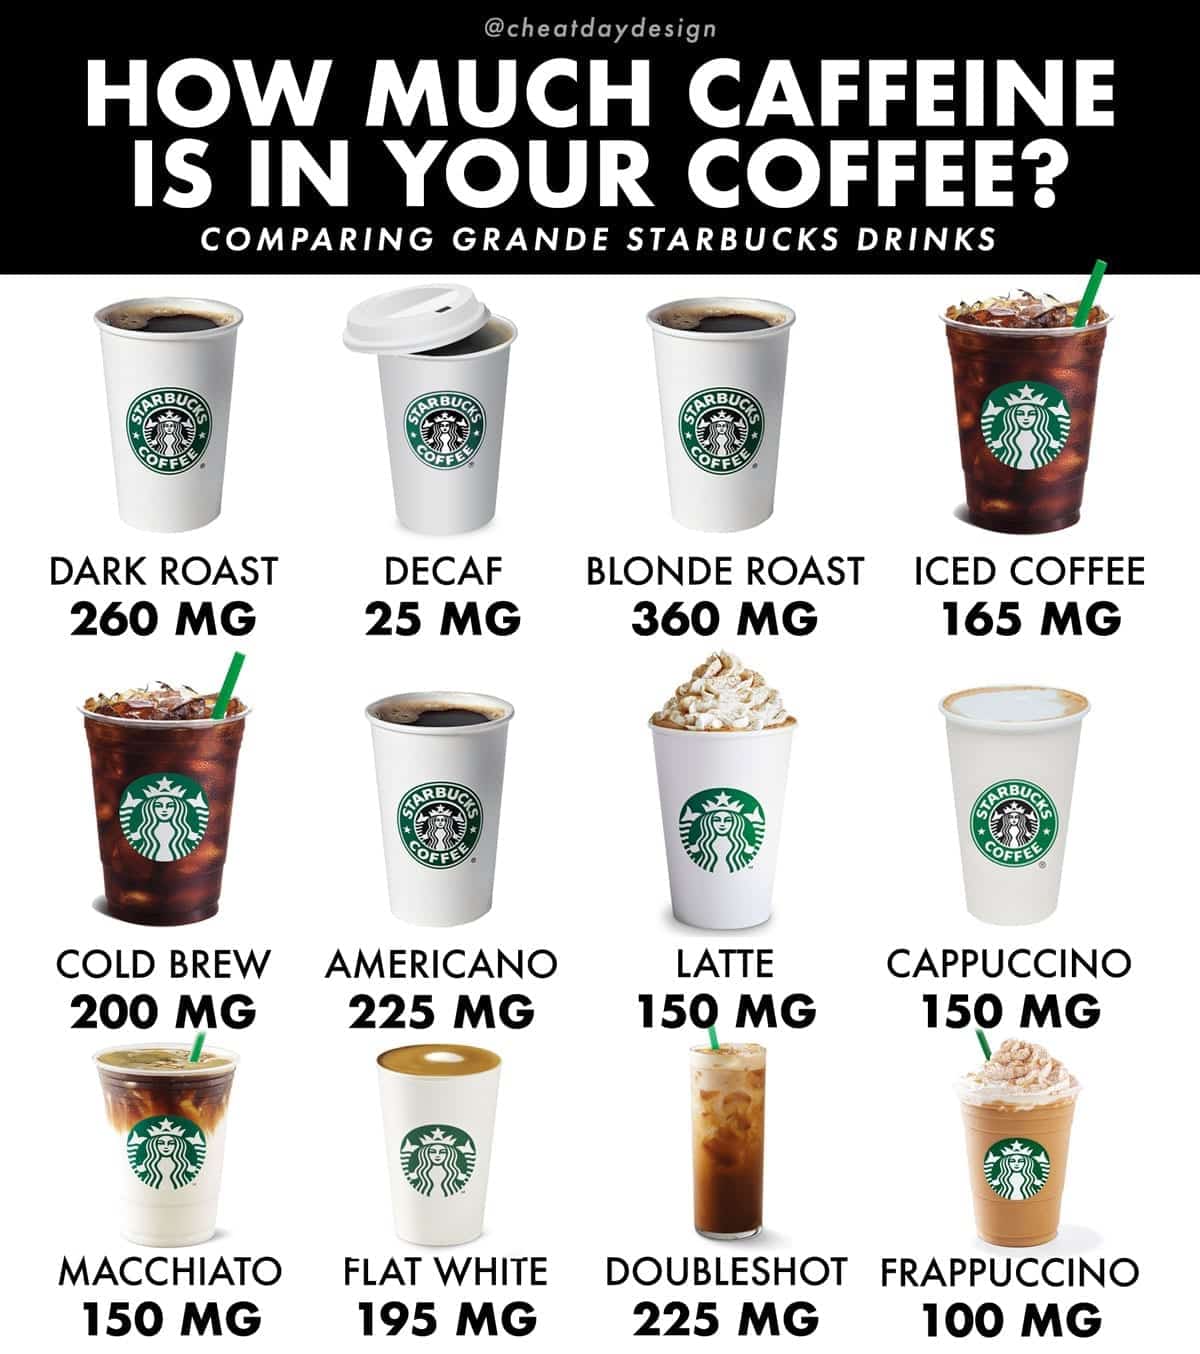 How Much Caffeine In A Tall Starbucks Coffee